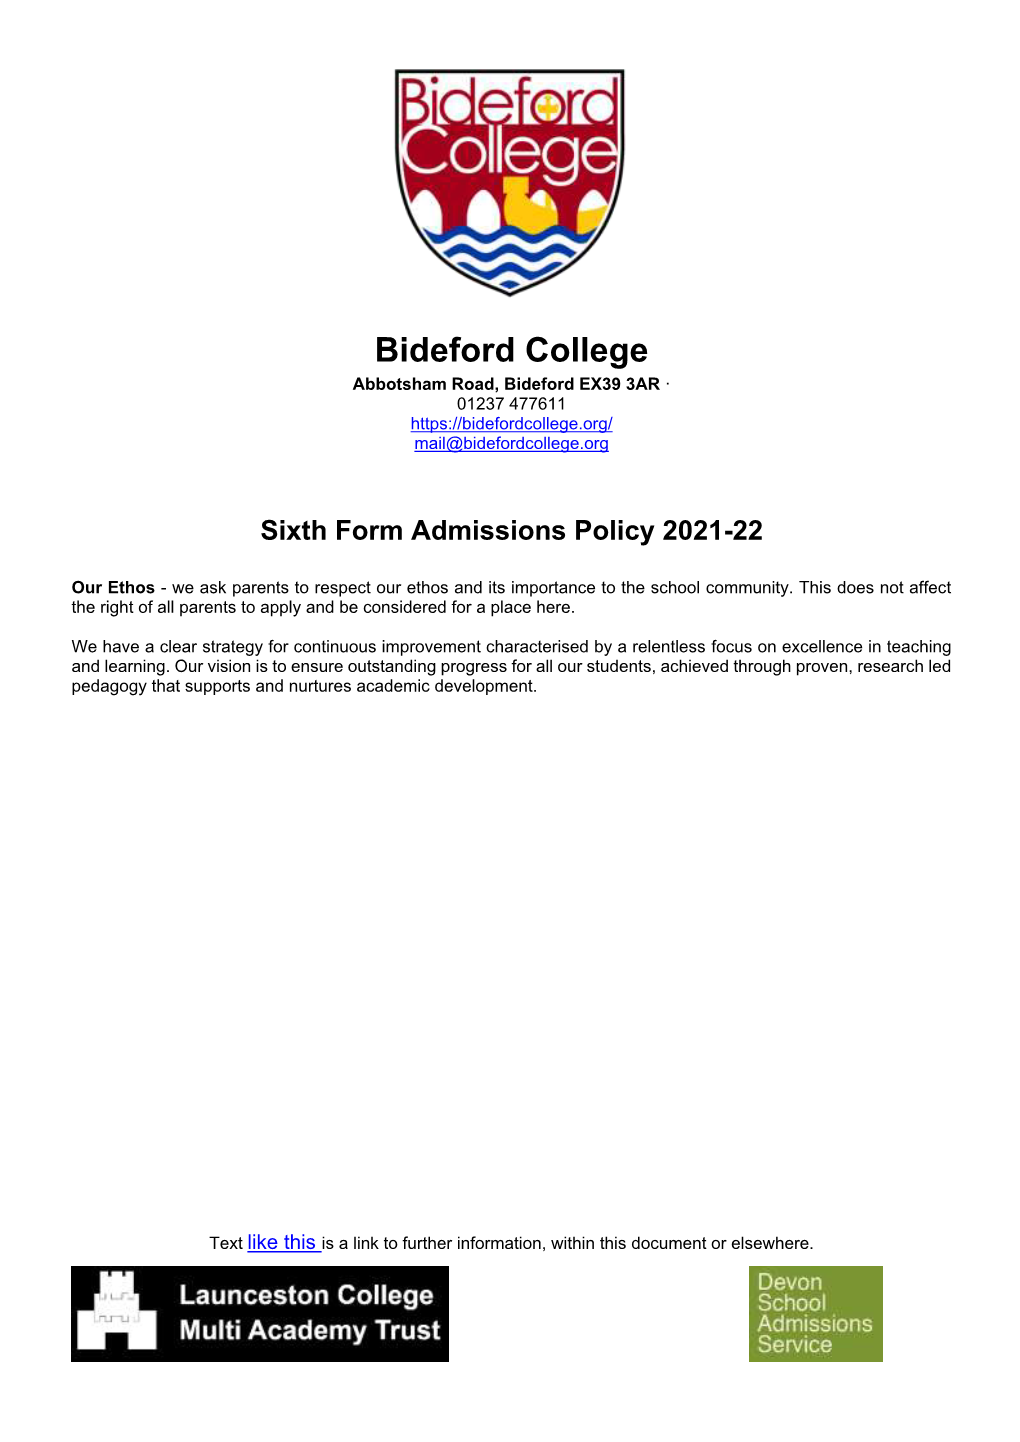 Bideford College Sixth Form Admissions Policy 2021